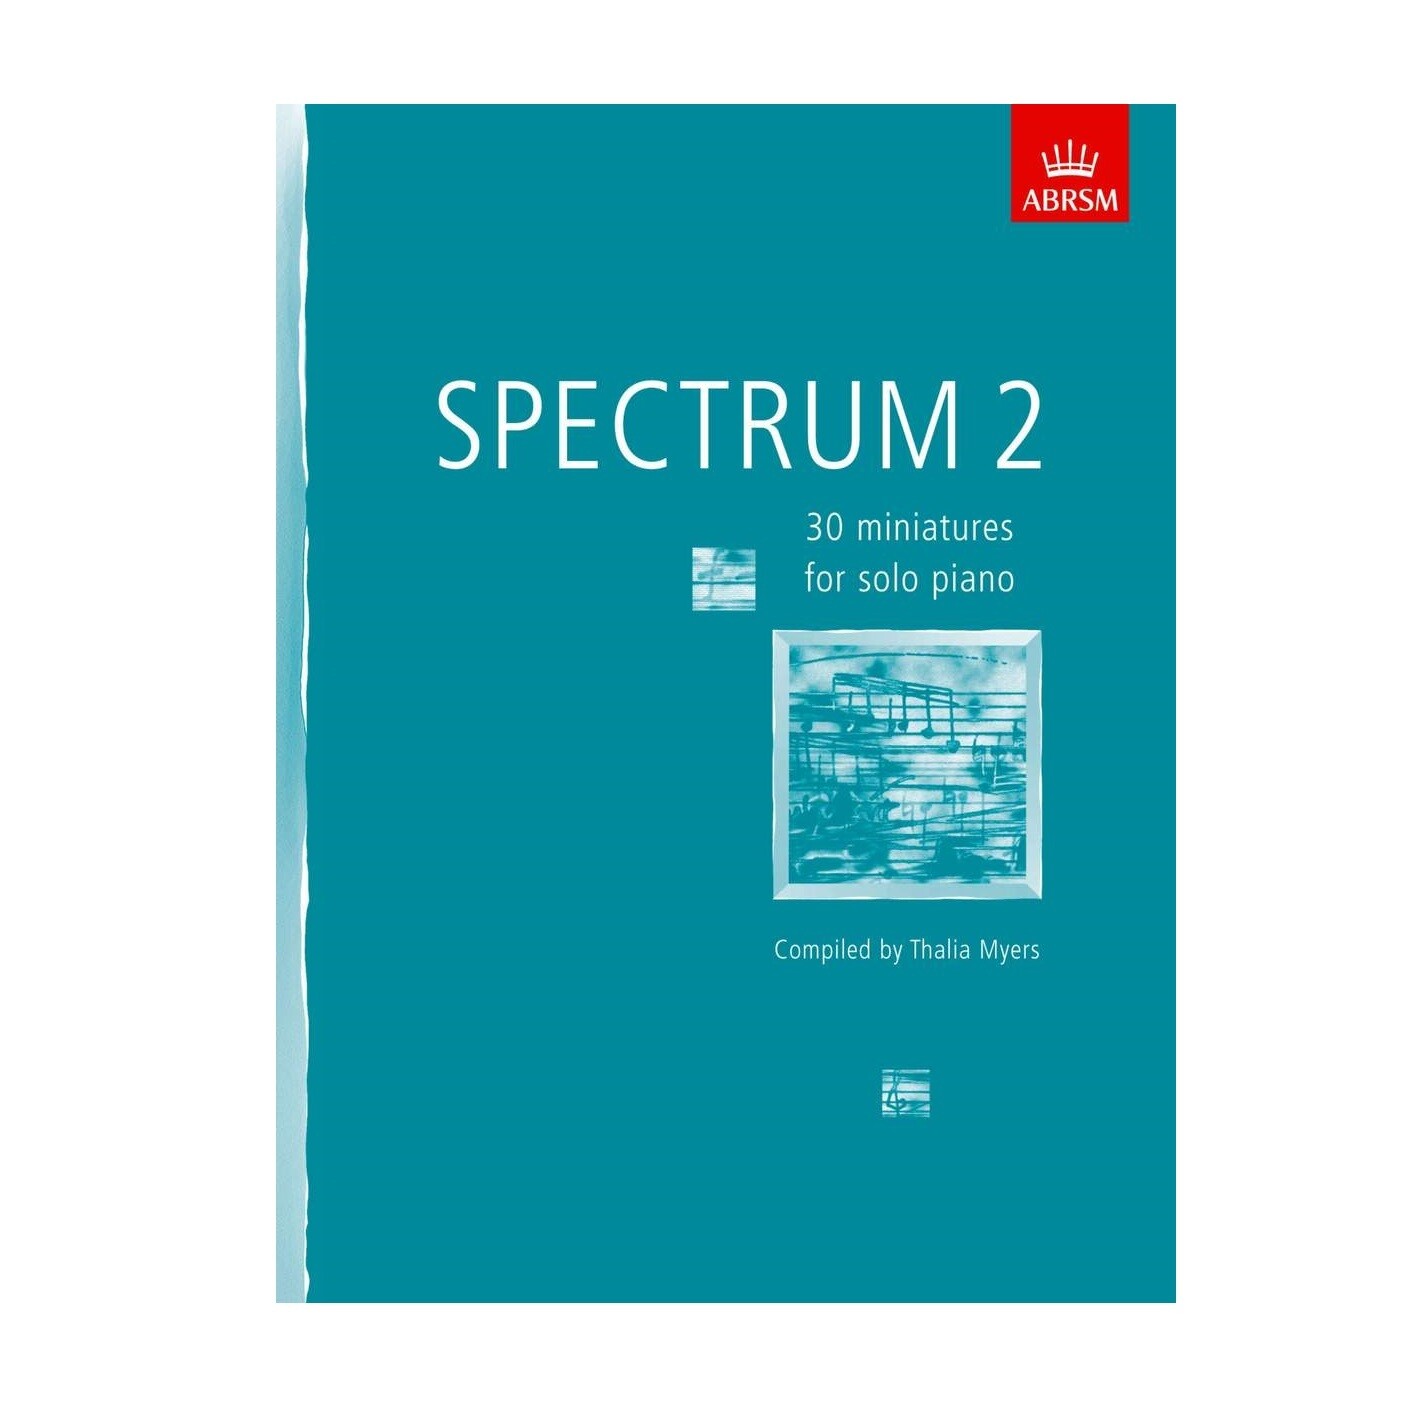 Spectrum 2 (30 Miniatures for Solo Piano)